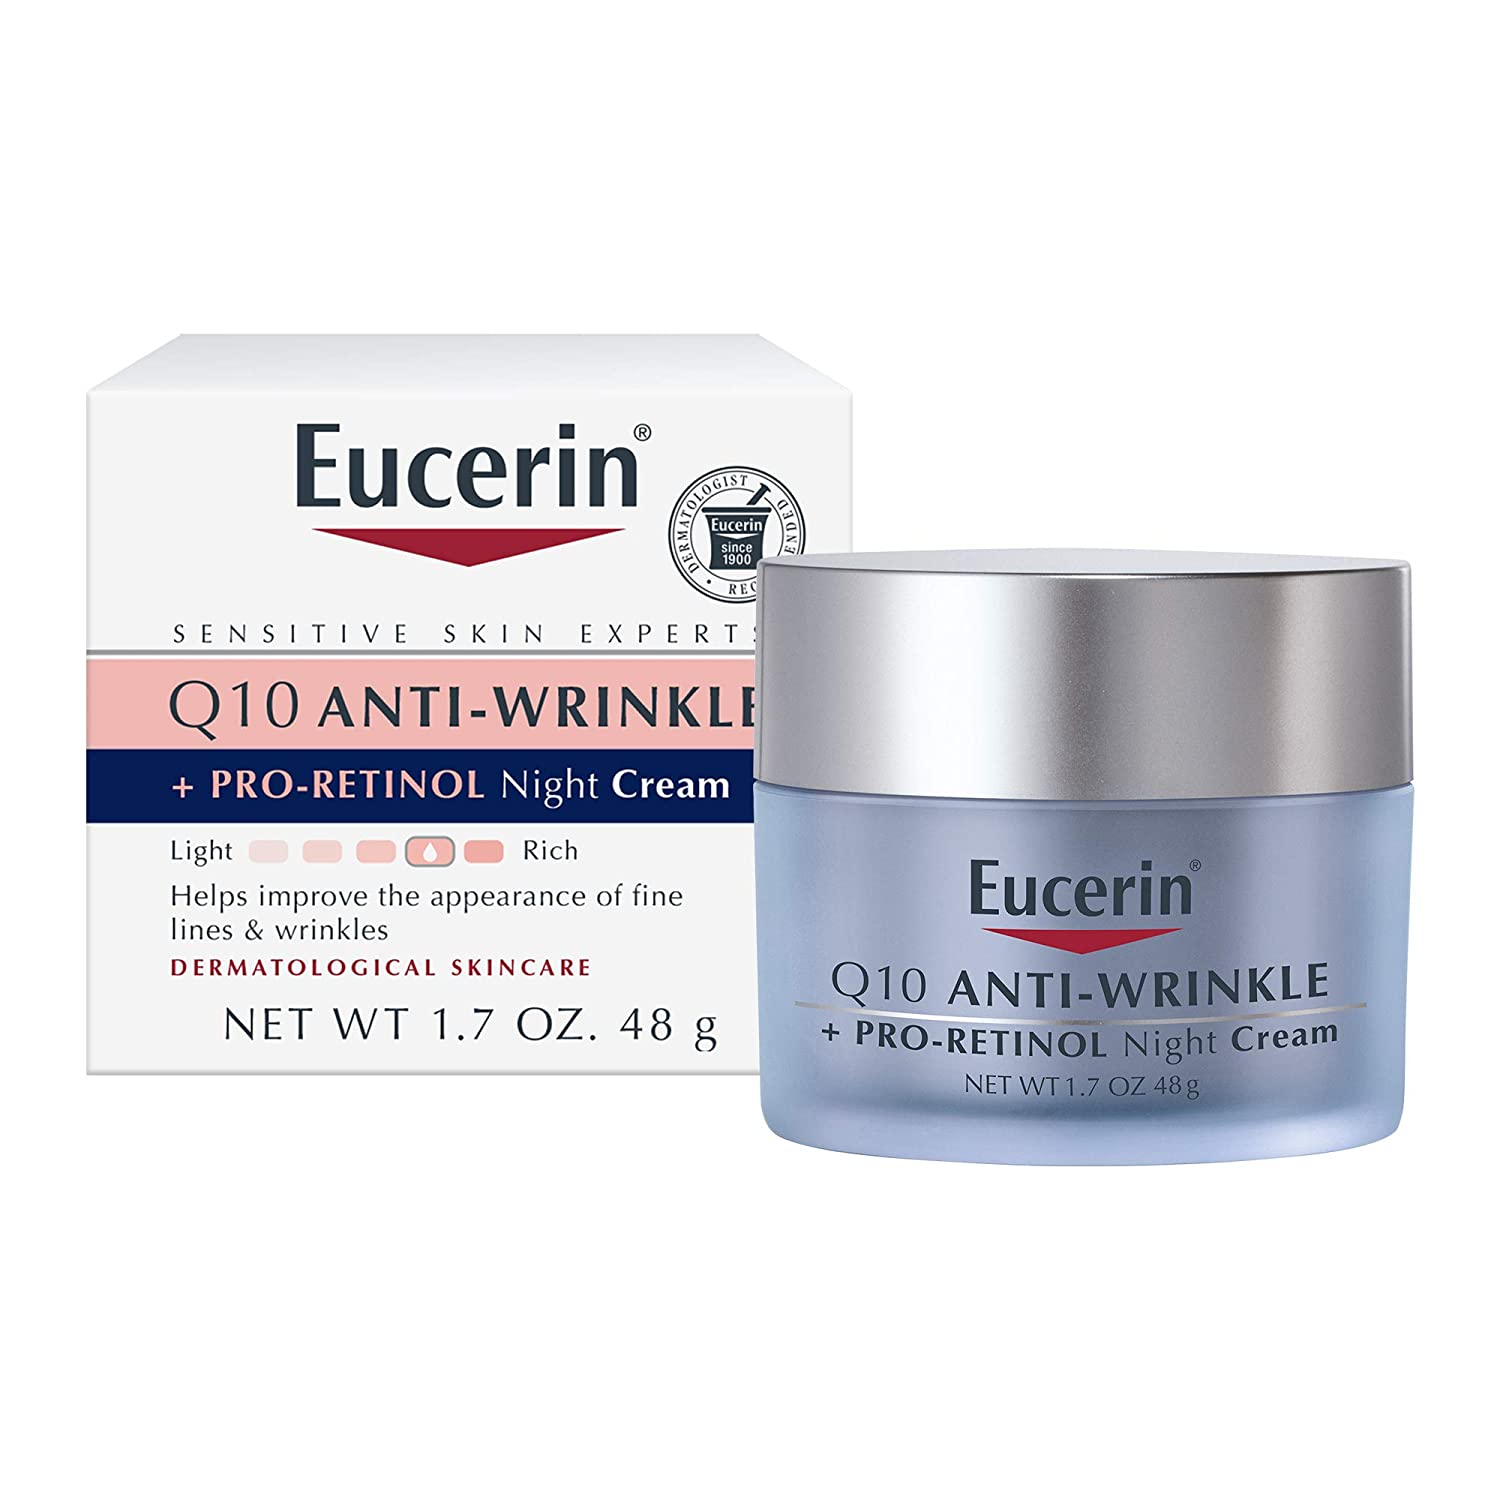 EUCERIN Kit Q10 Anti Wrinkle + PRO Retinol Night Cream with Q10 Anti Wrinkle + Face Cream